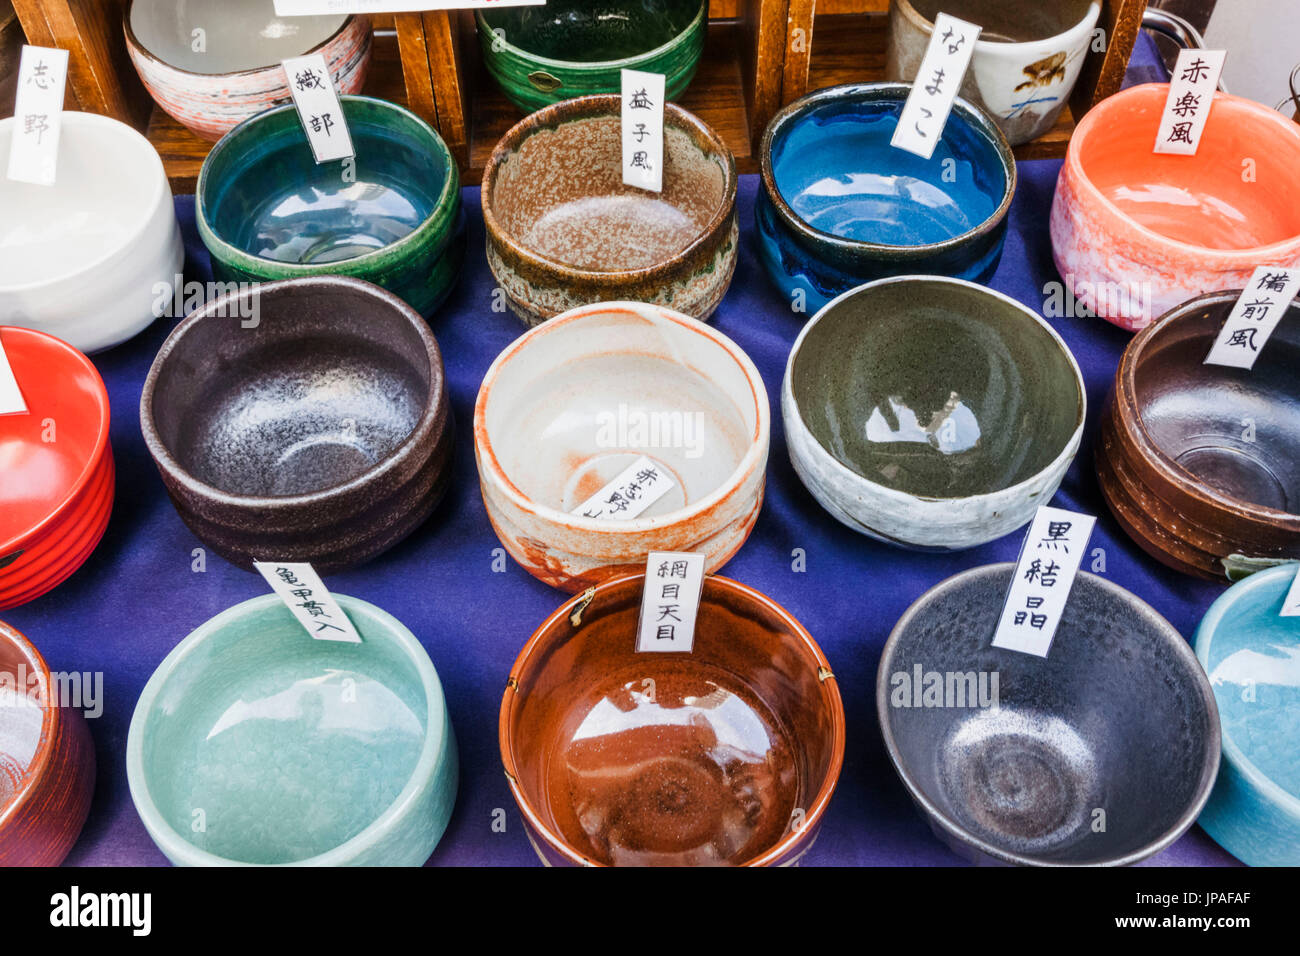 Japan, Honshu, Tokyo, Asakusa, Shop Display of Bowls Stock Photo